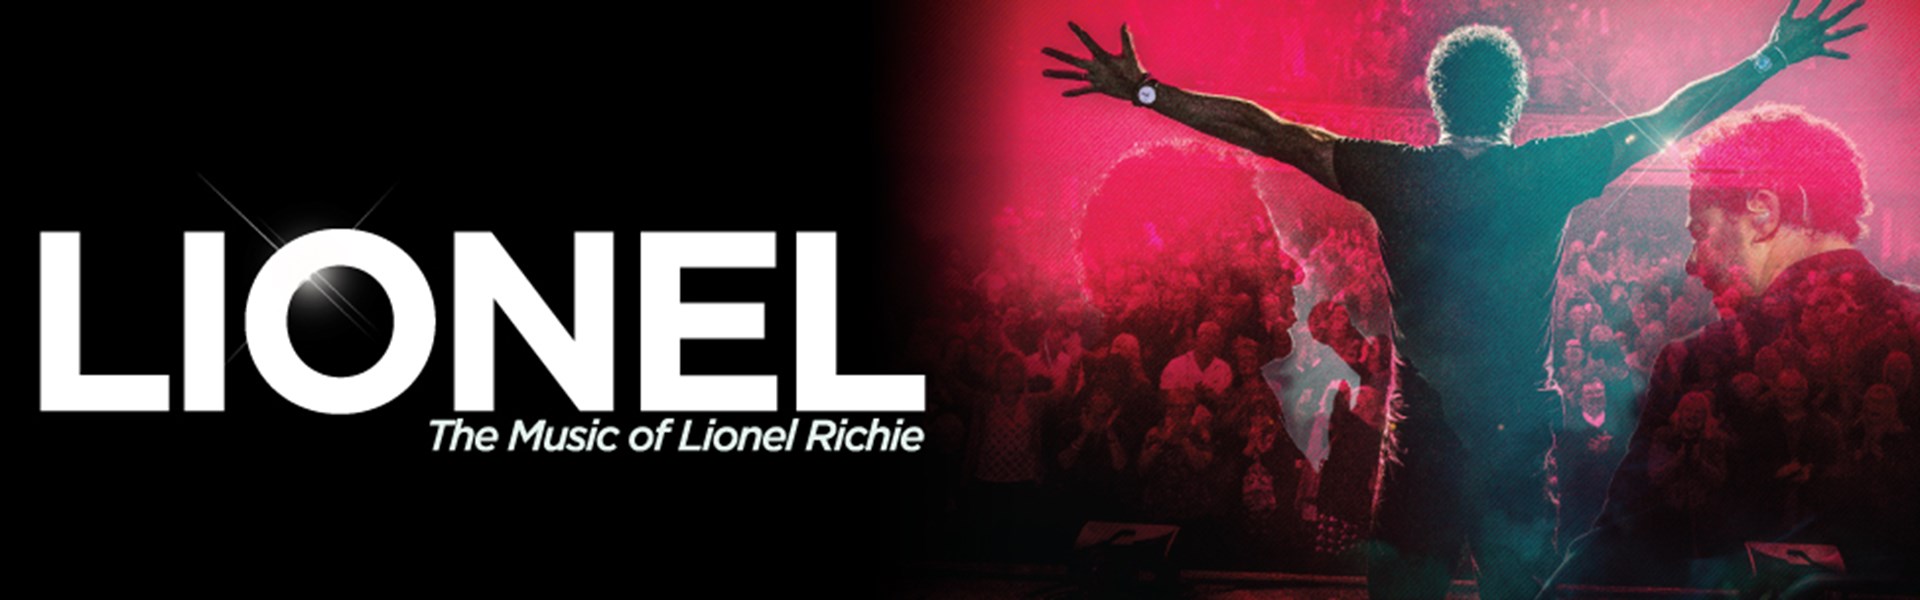 Lionel: The Music of Lionel Richie